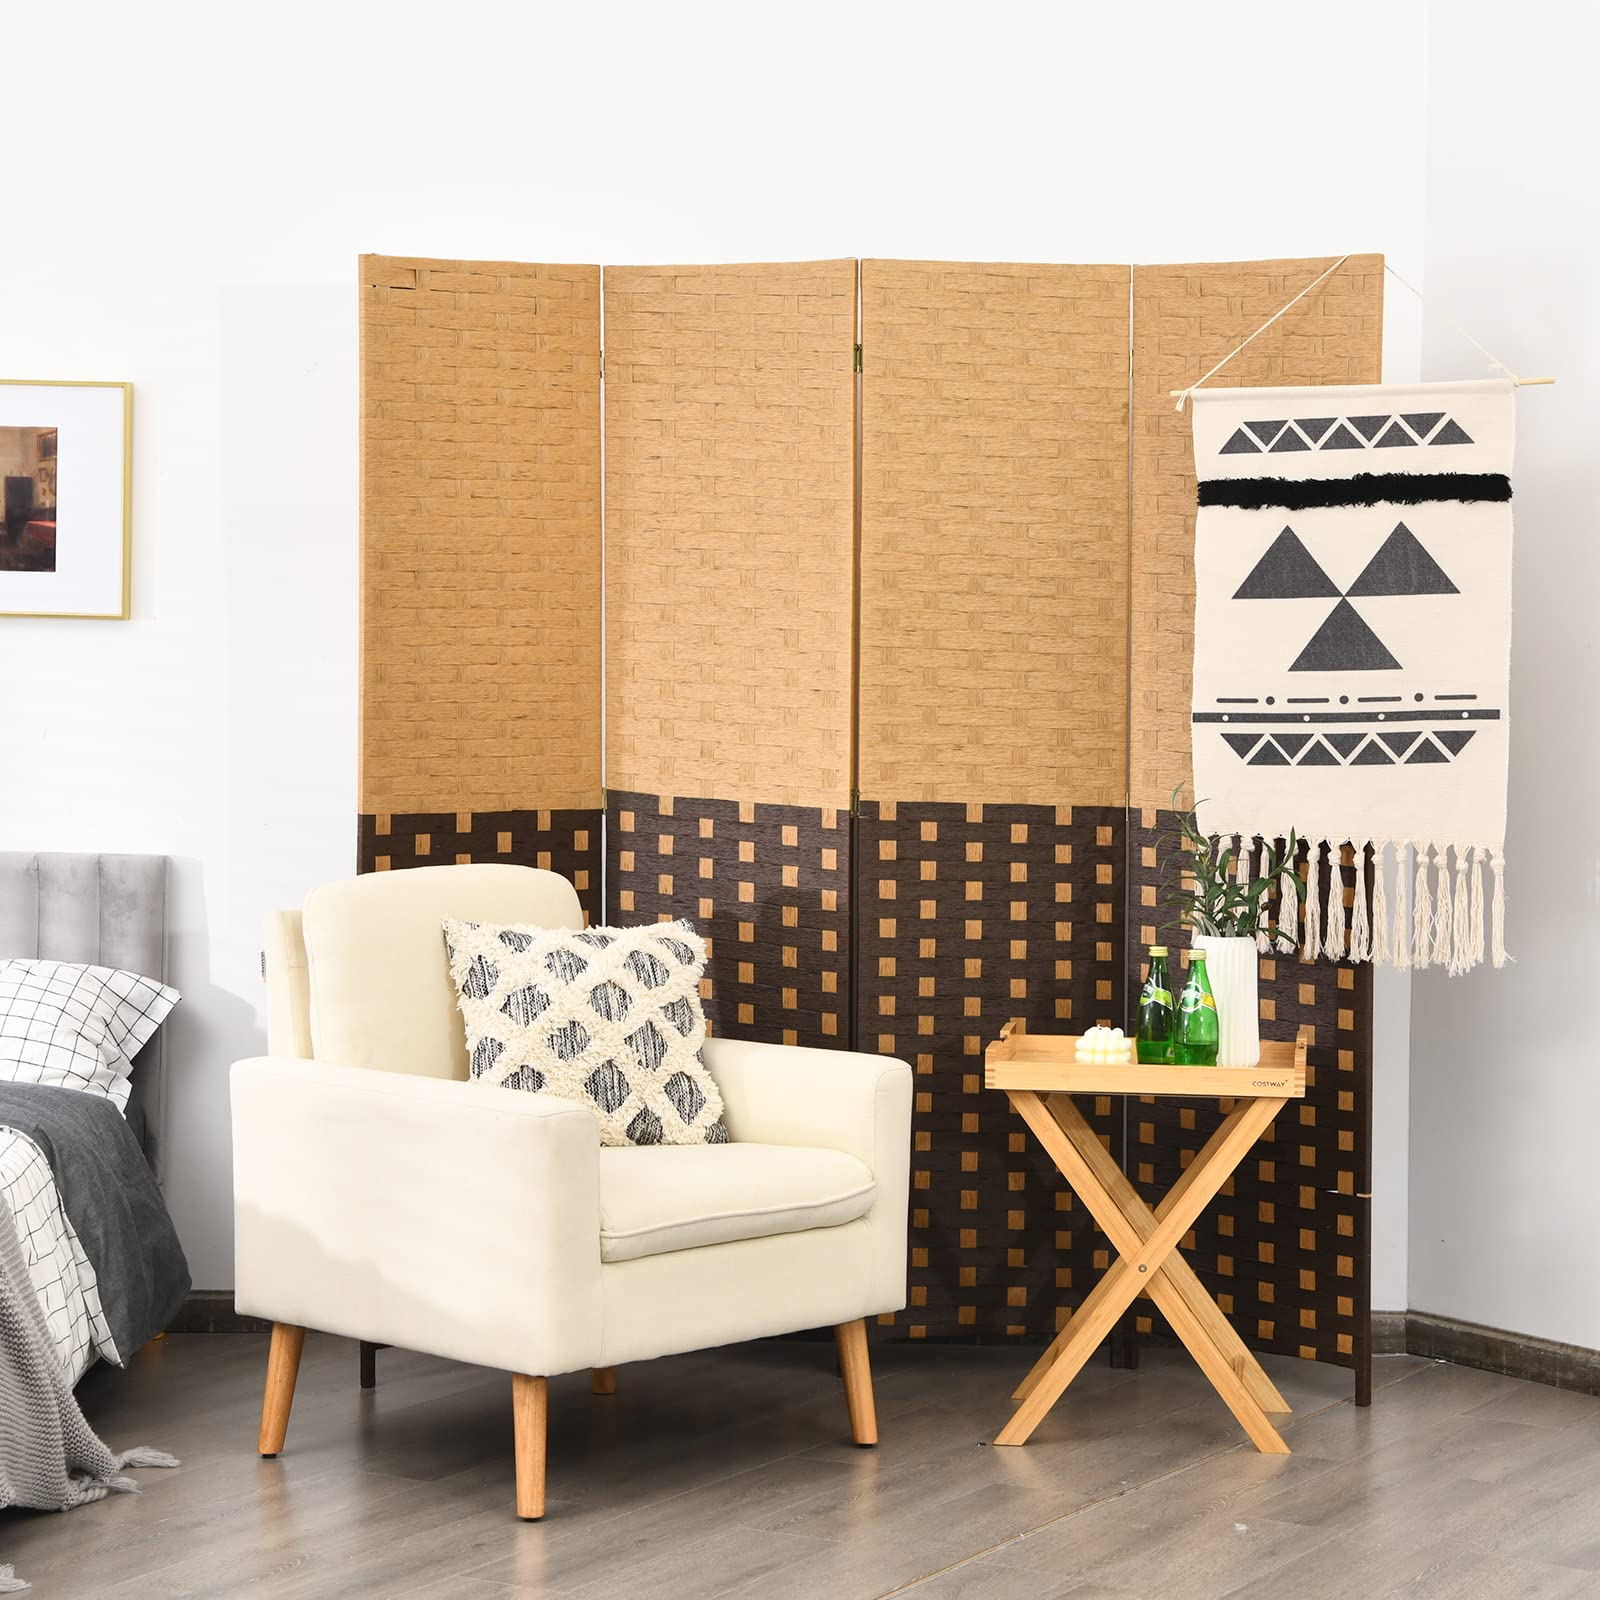 Giantex 4 Panel Room Divider, 6 Ft Tall Handmade Rattan Room Dividers, Portable Wood Room Separators Divider